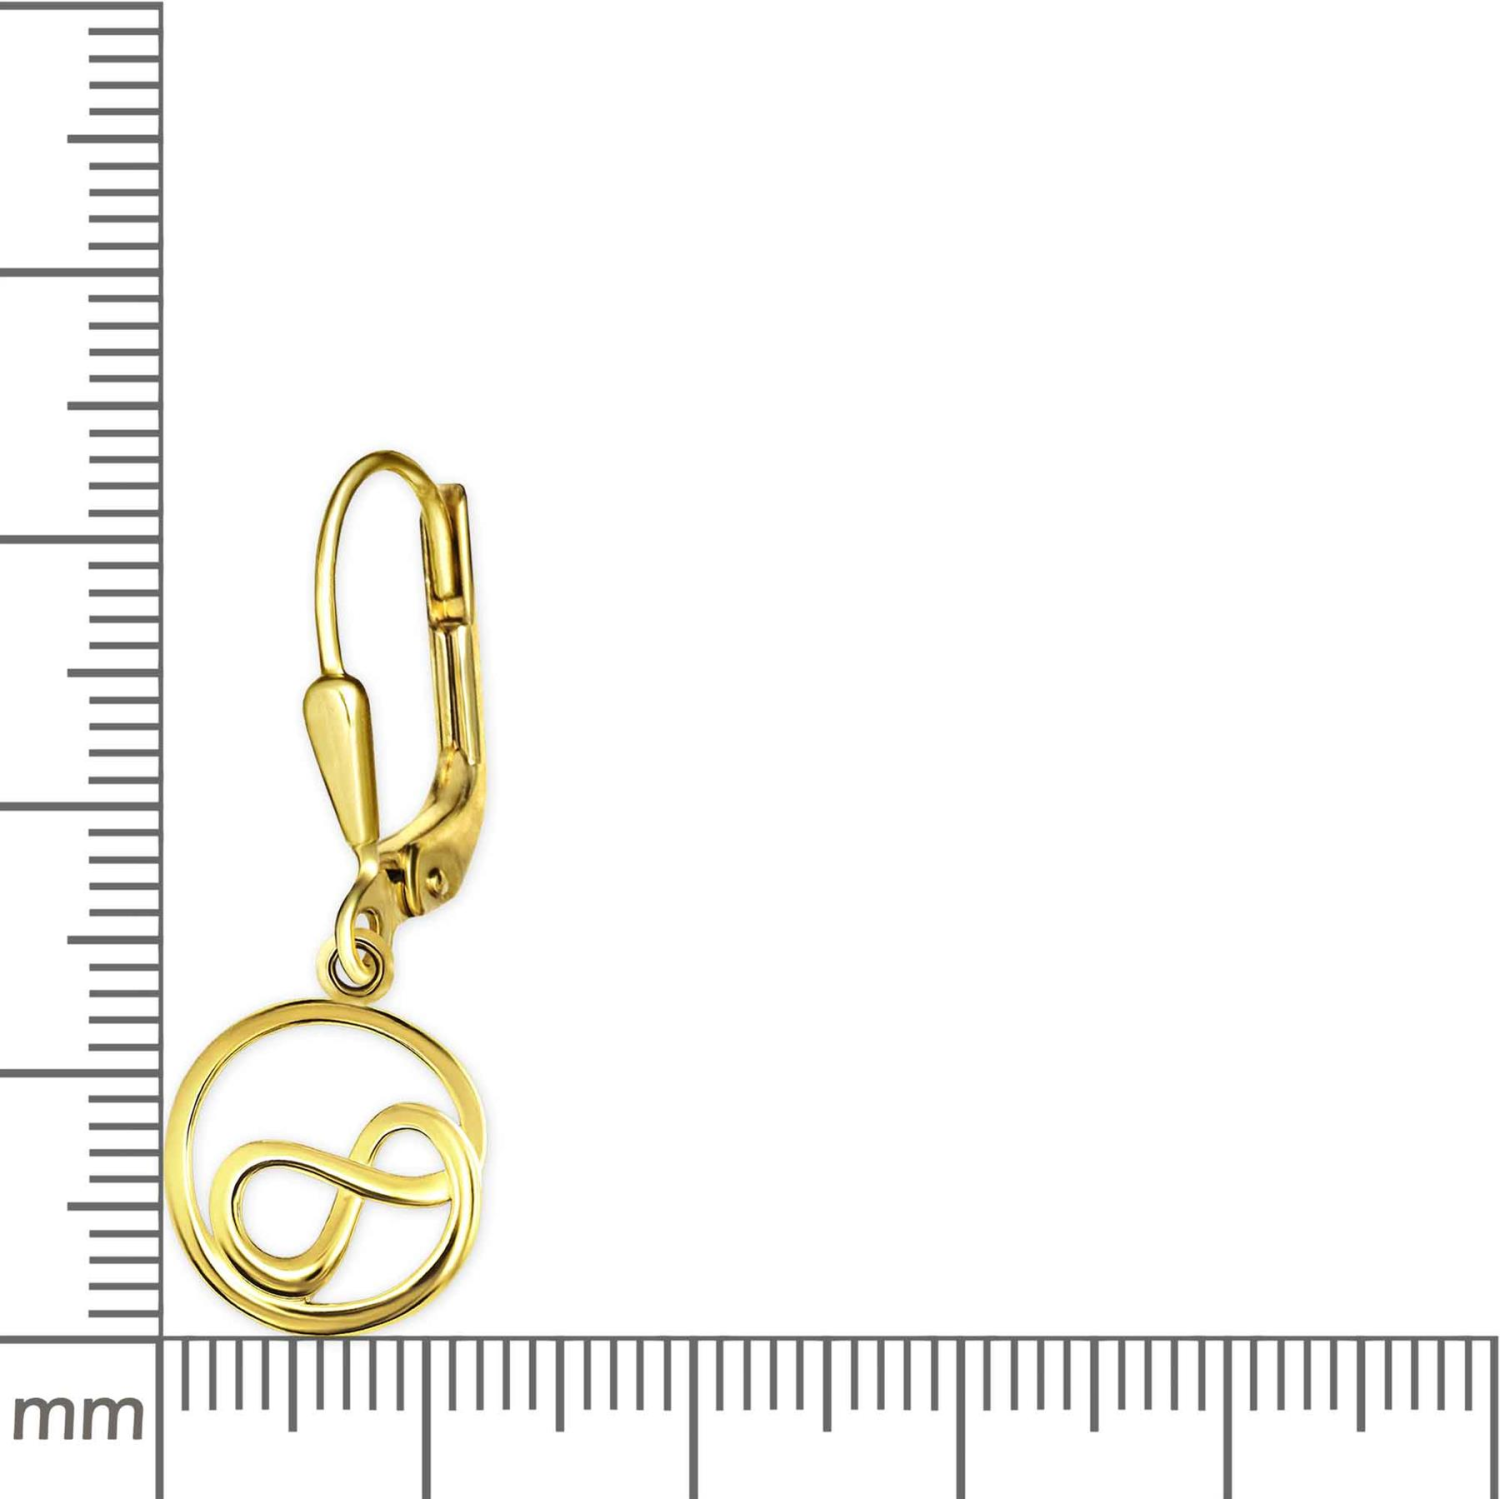 Goldene Ohrringe Unendlichkeit Knoten kreisförmig vergoldet Echt Silber 925